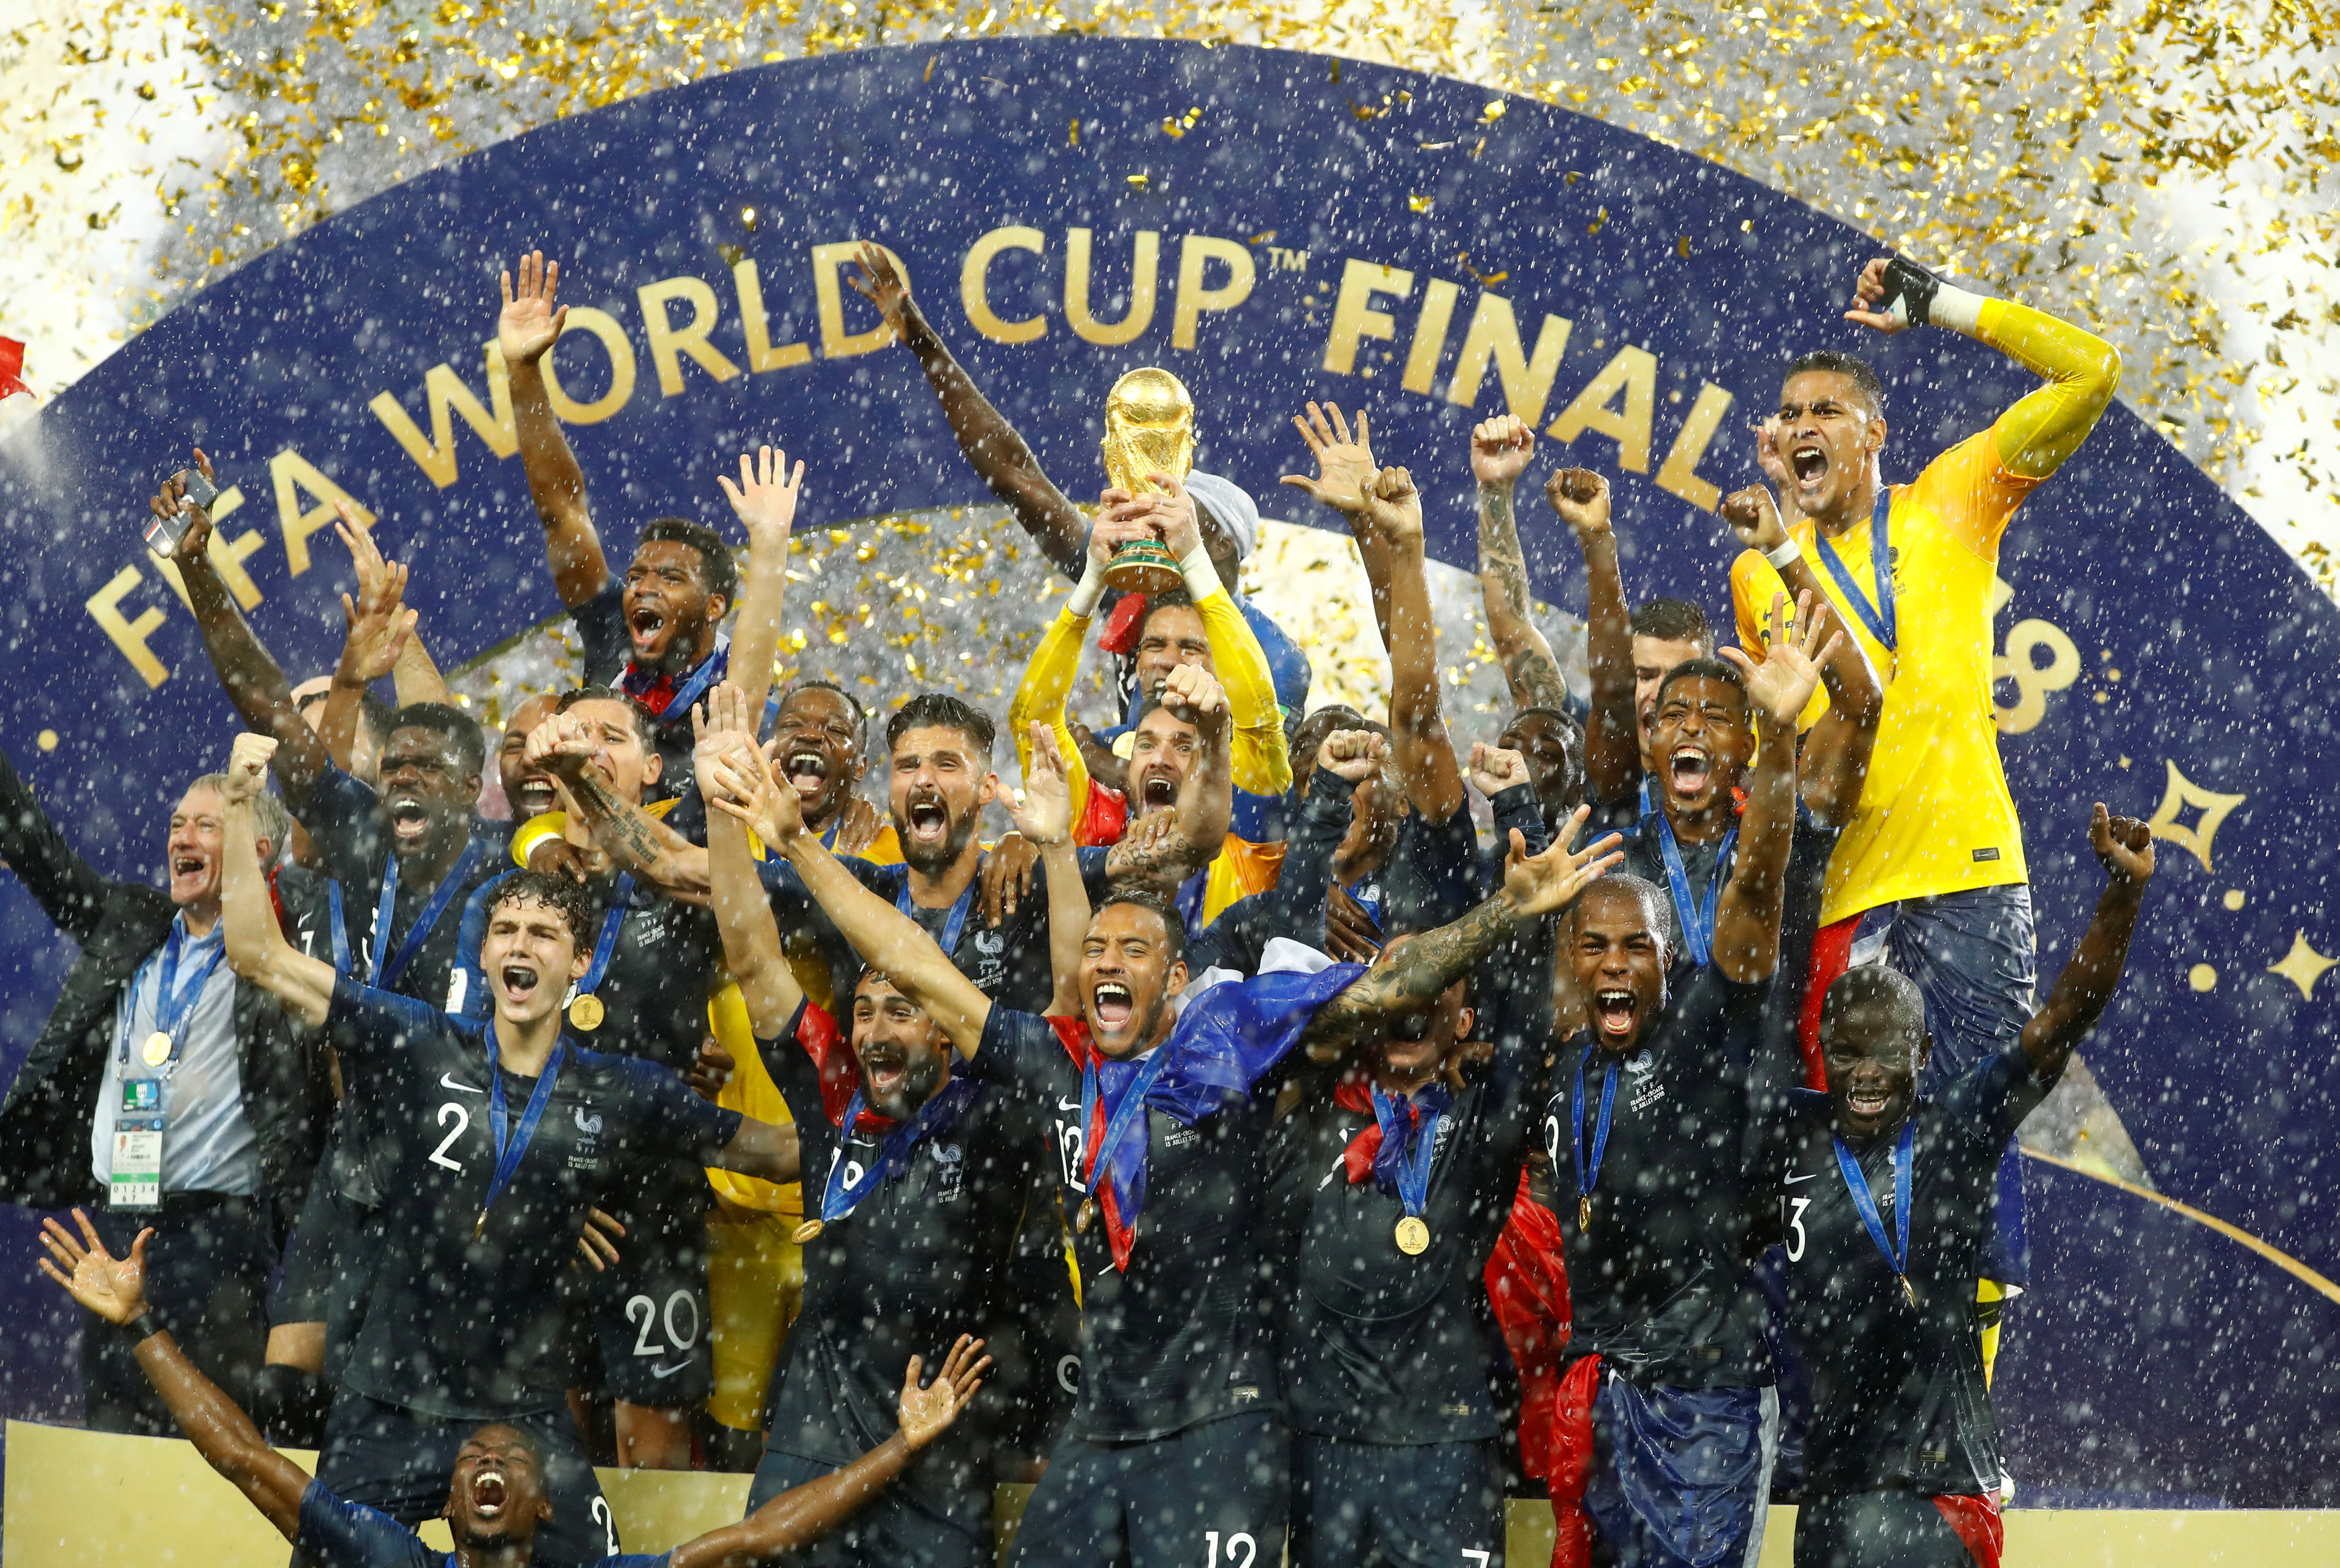 World cup finals